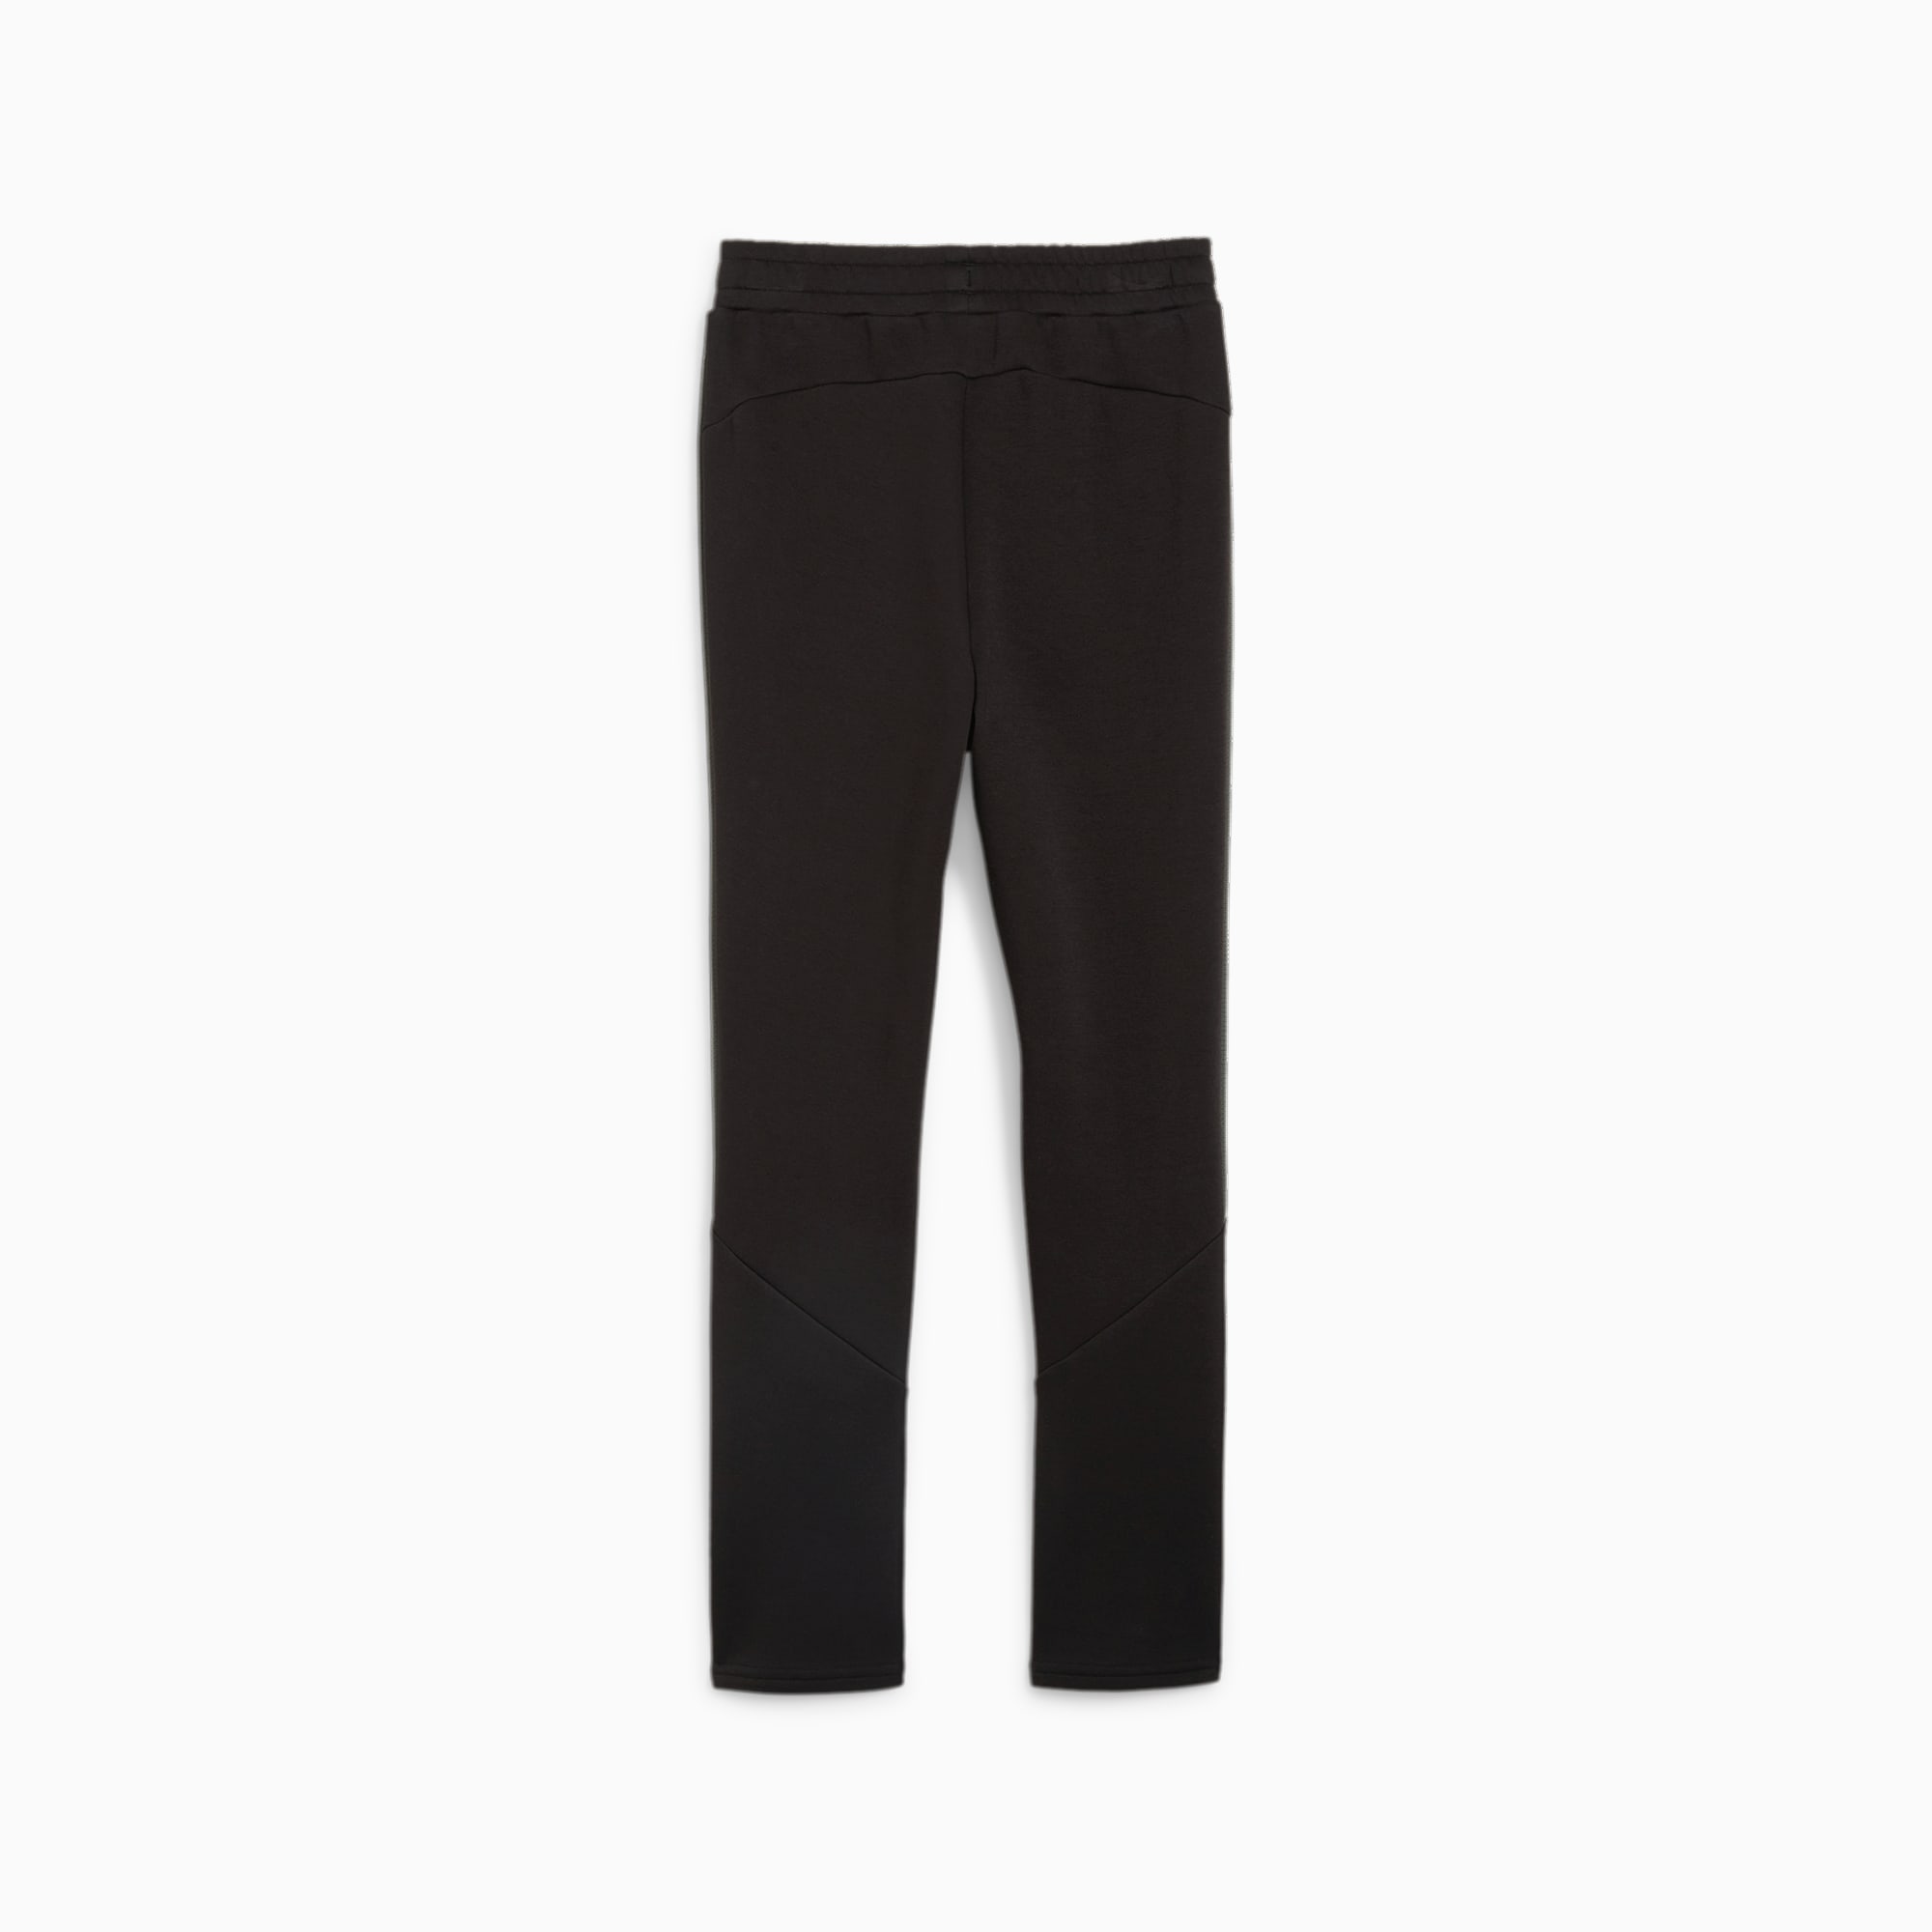 PUMA Evostripe Youth Sweatpants, Black, Size 116, Clothing